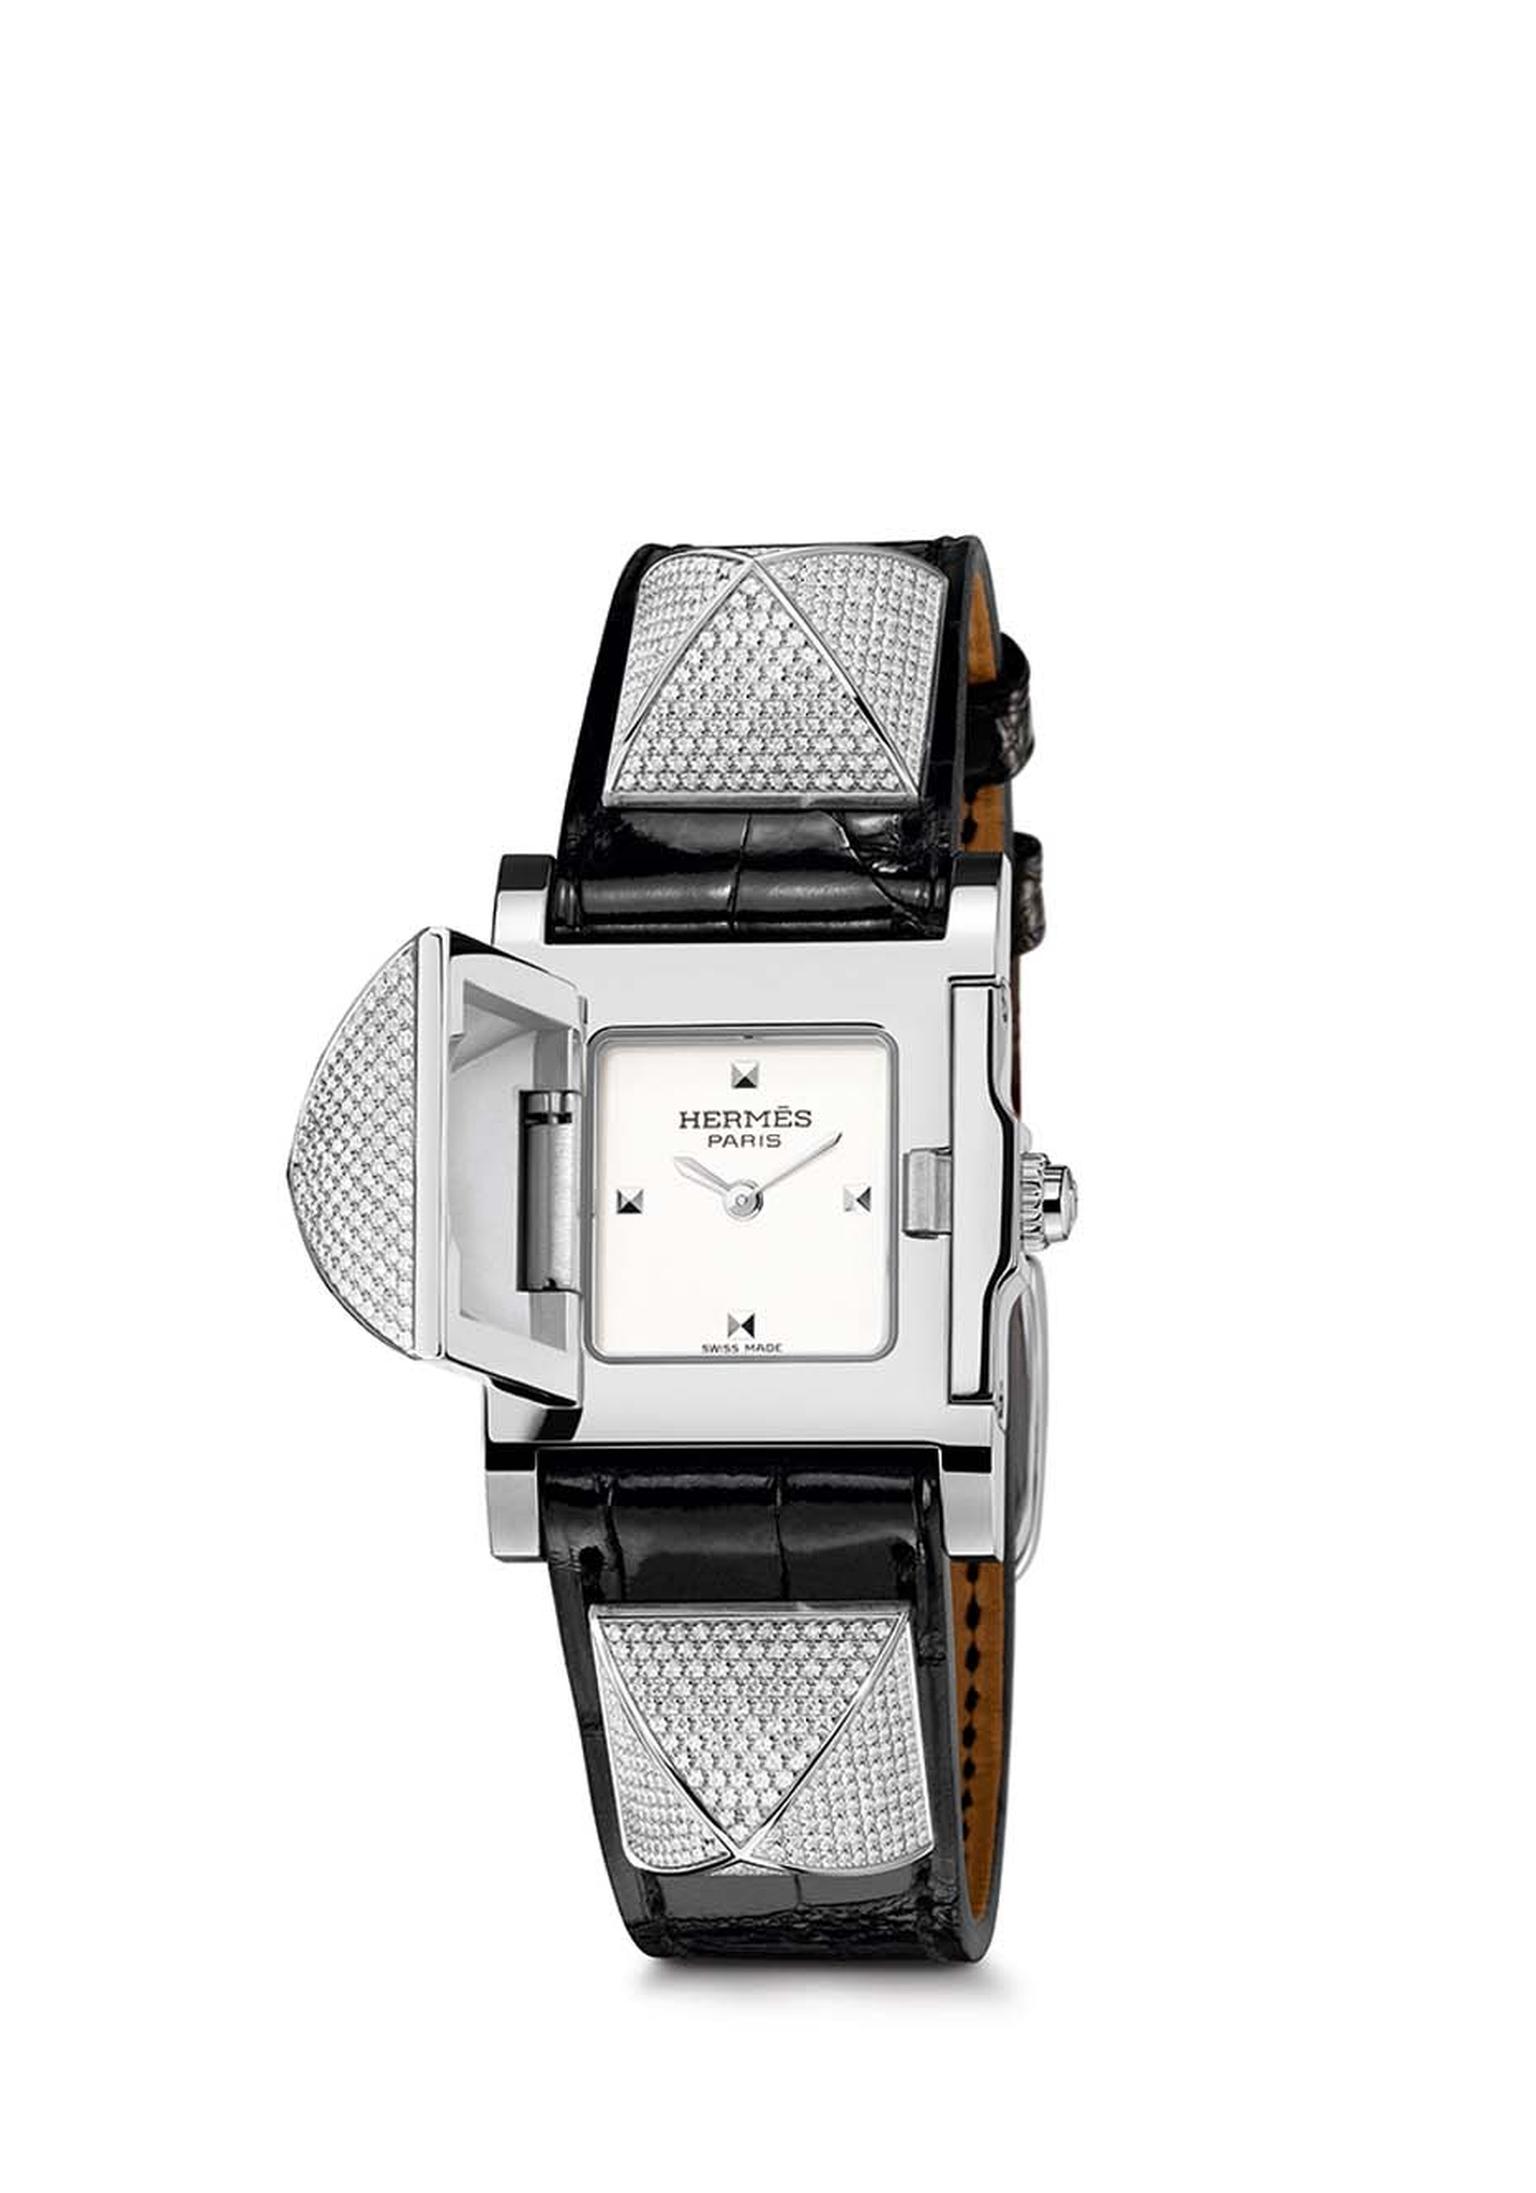 Hermès Médor smooth black alligator PM watch set with a total of 499 diamonds.